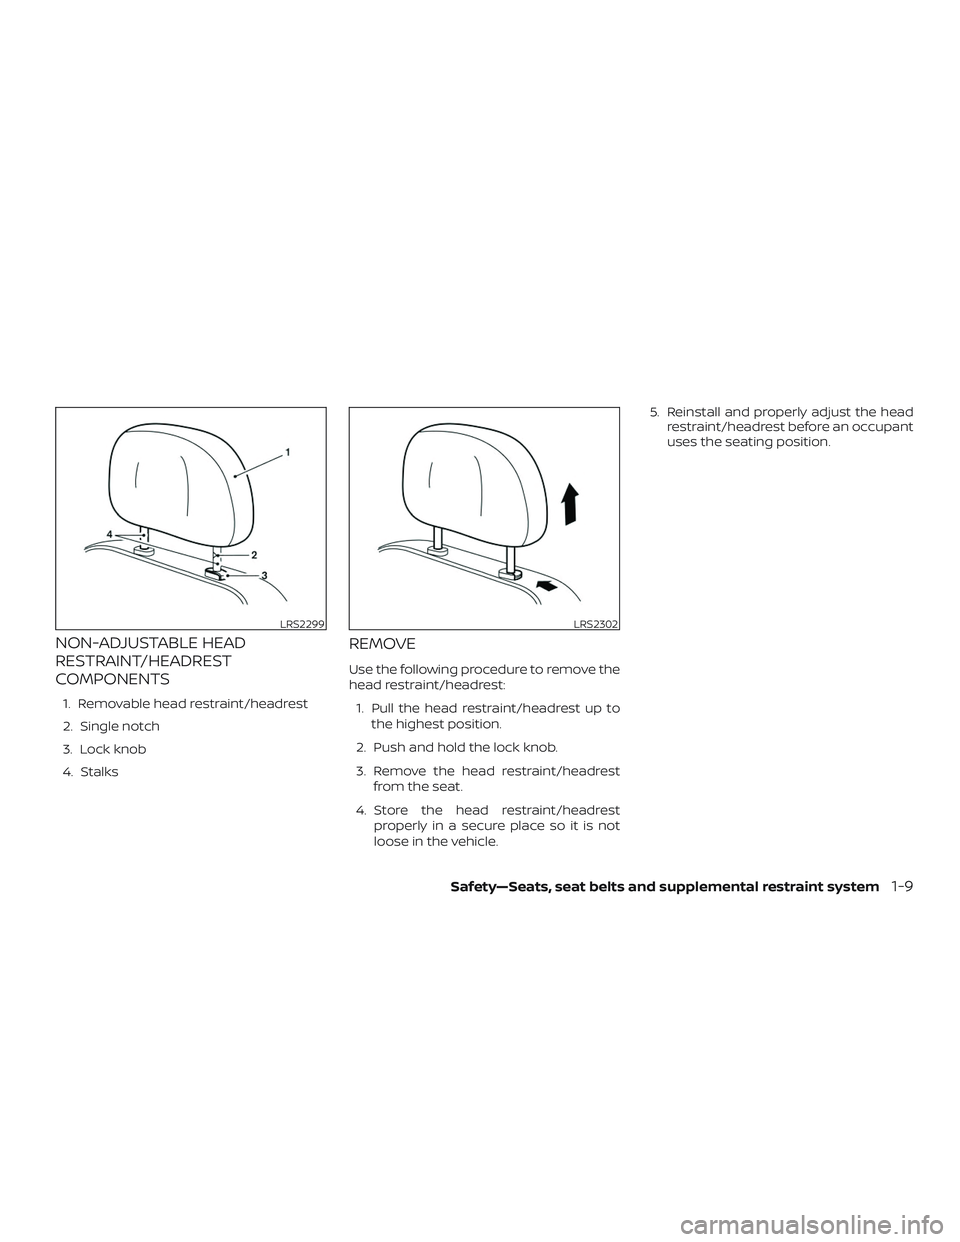 NISSAN ALTIMA 2020  Owner´s Manual NON-ADJUSTABLE HEAD
RESTRAINT/HEADREST
COMPONENTS
1. Removable head restraint/headrest
2. Single notch
3. Lock knob
4. Stalks
REMOVE
Use the following procedure to remove the
head restraint/headrest:1